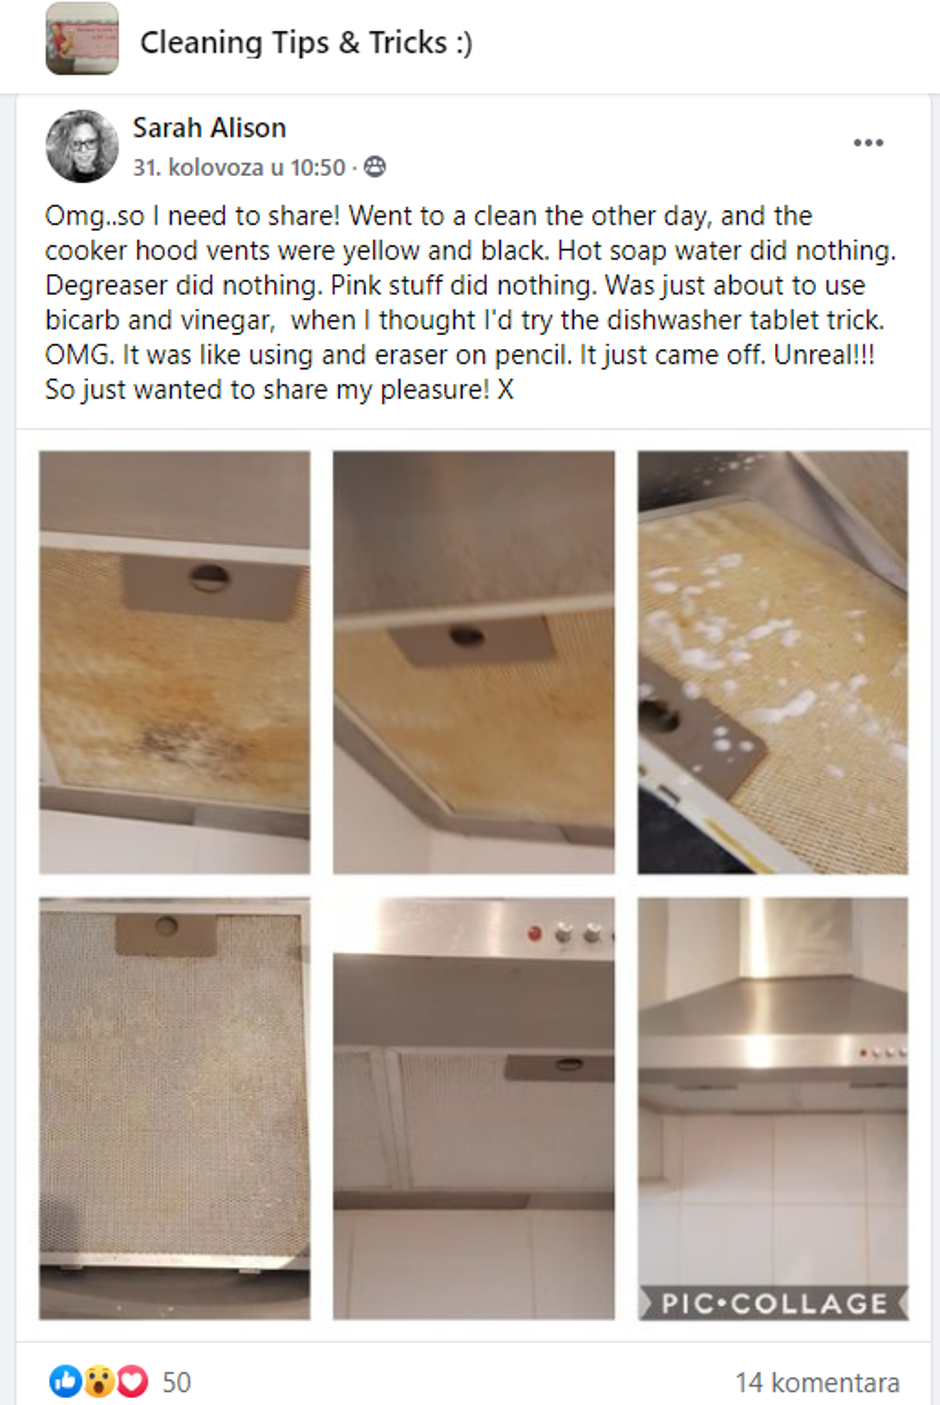  | Author: Screenshot: Facebook/ Sarah Alison/Cleaning Tips & Tricks